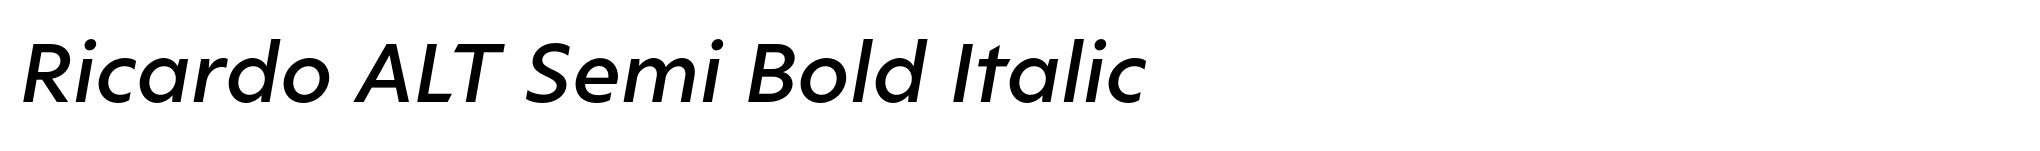 Ricardo ALT Semi Bold Italic image